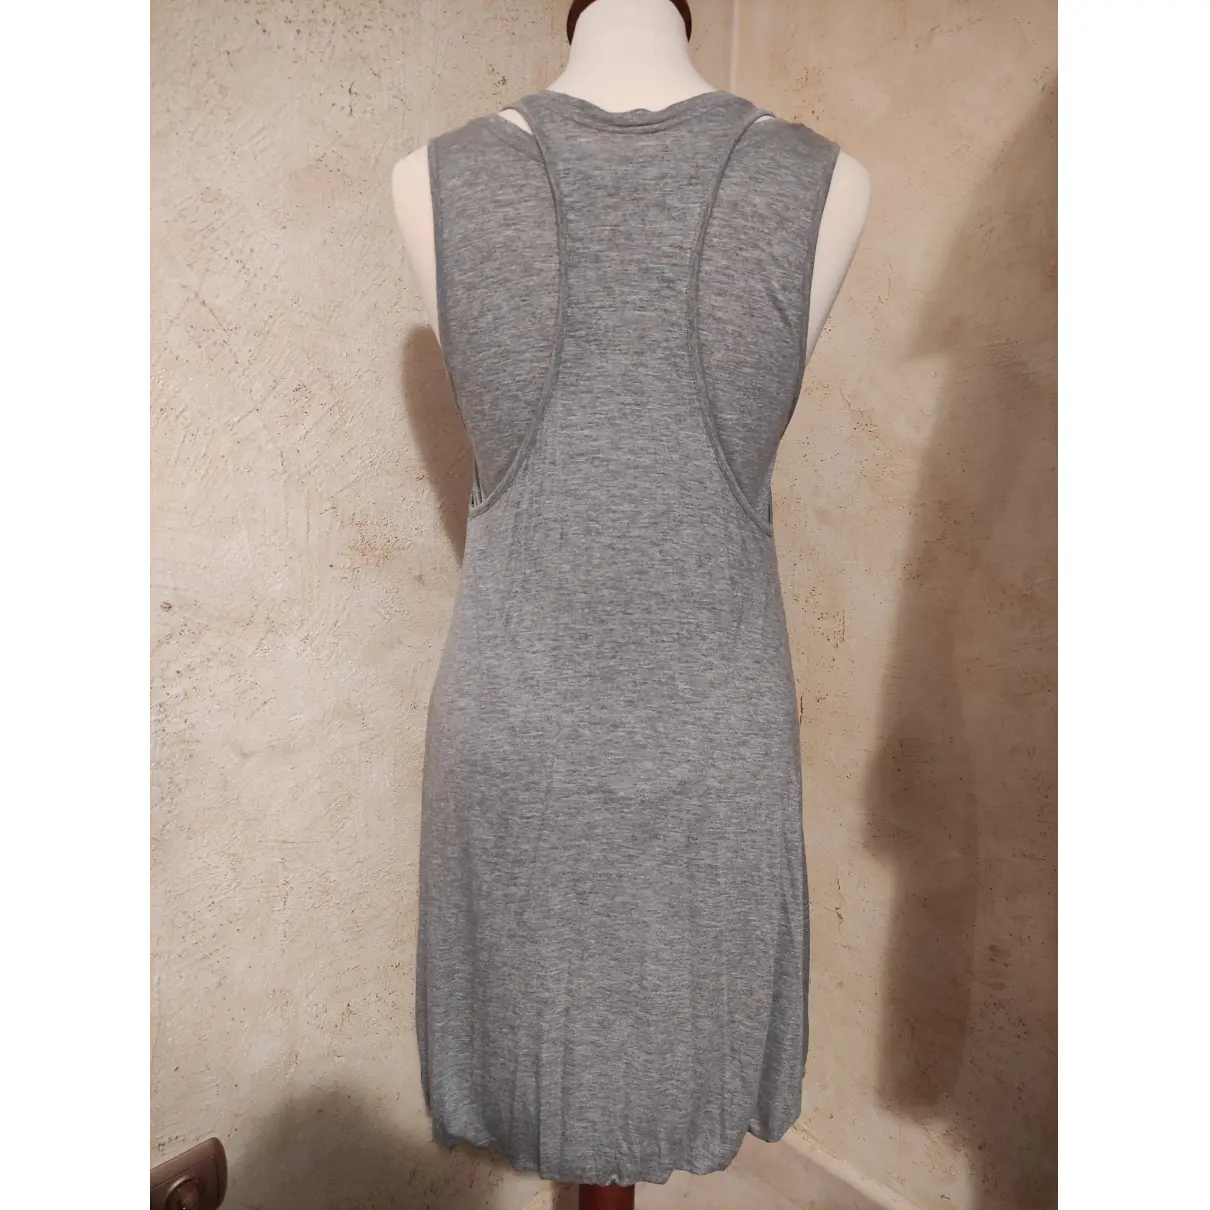 Buy See by Chloé Mini dress online